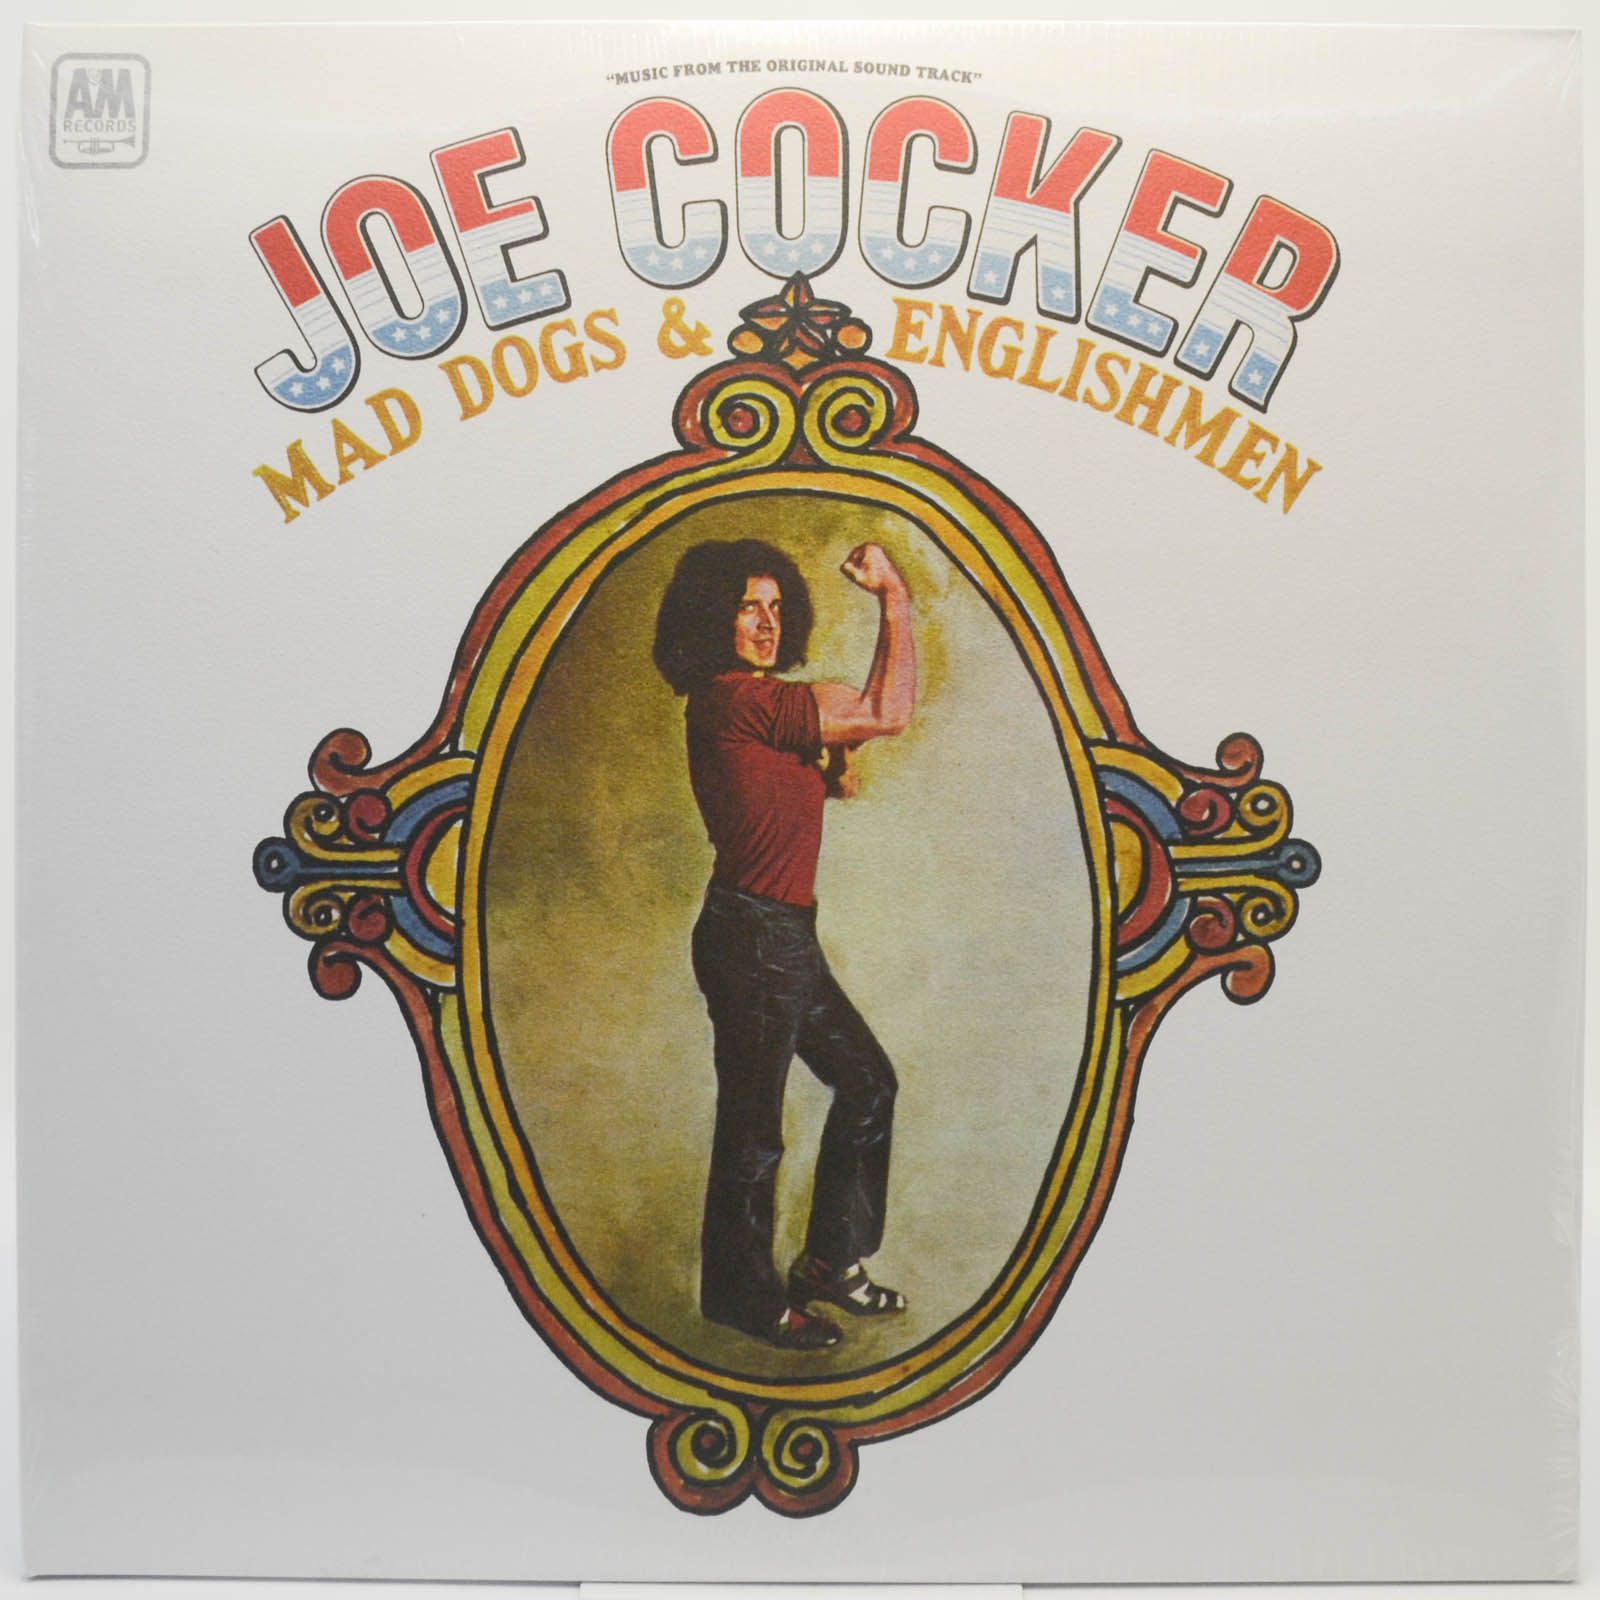 Joe Cocker — Mad Dogs & Englishmen (2LP), 1970